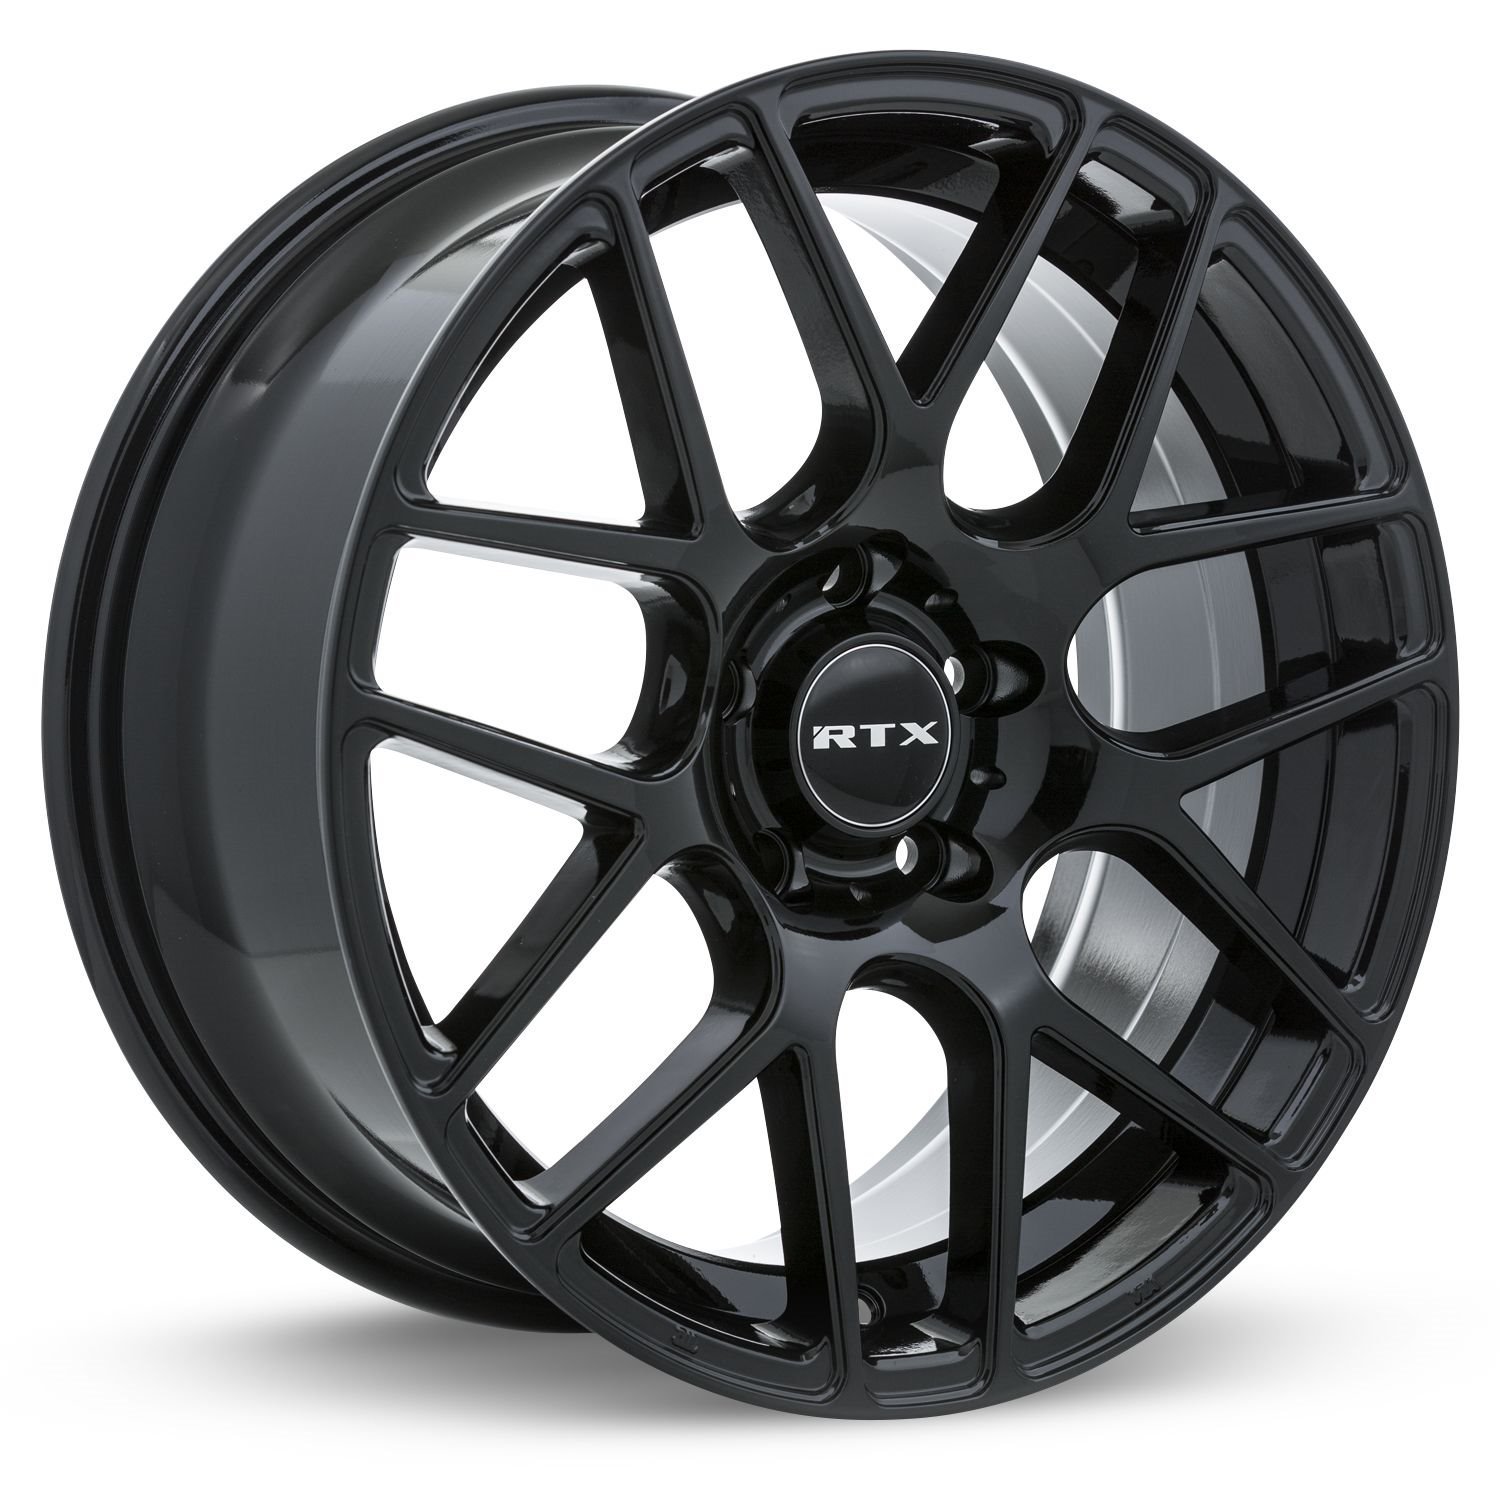 082771 RTX-Series Envy Wheel [Size: 18" x 8"] Gloss Black Finish